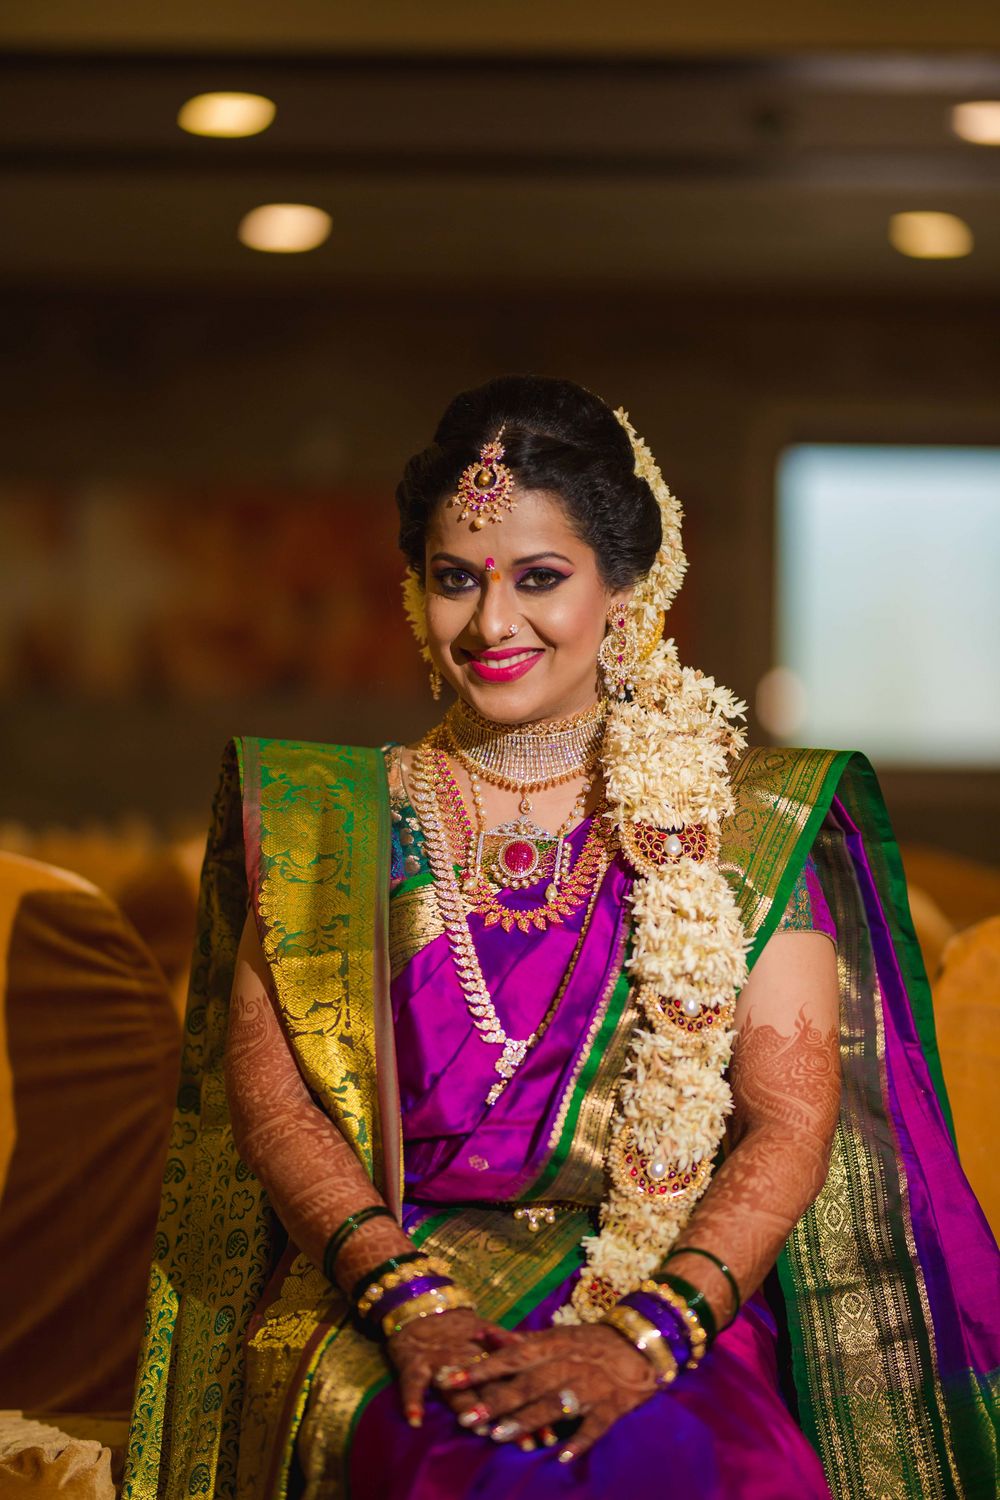 Photo of South Indian bride with floral braid hairstyle and kanjivaram saree